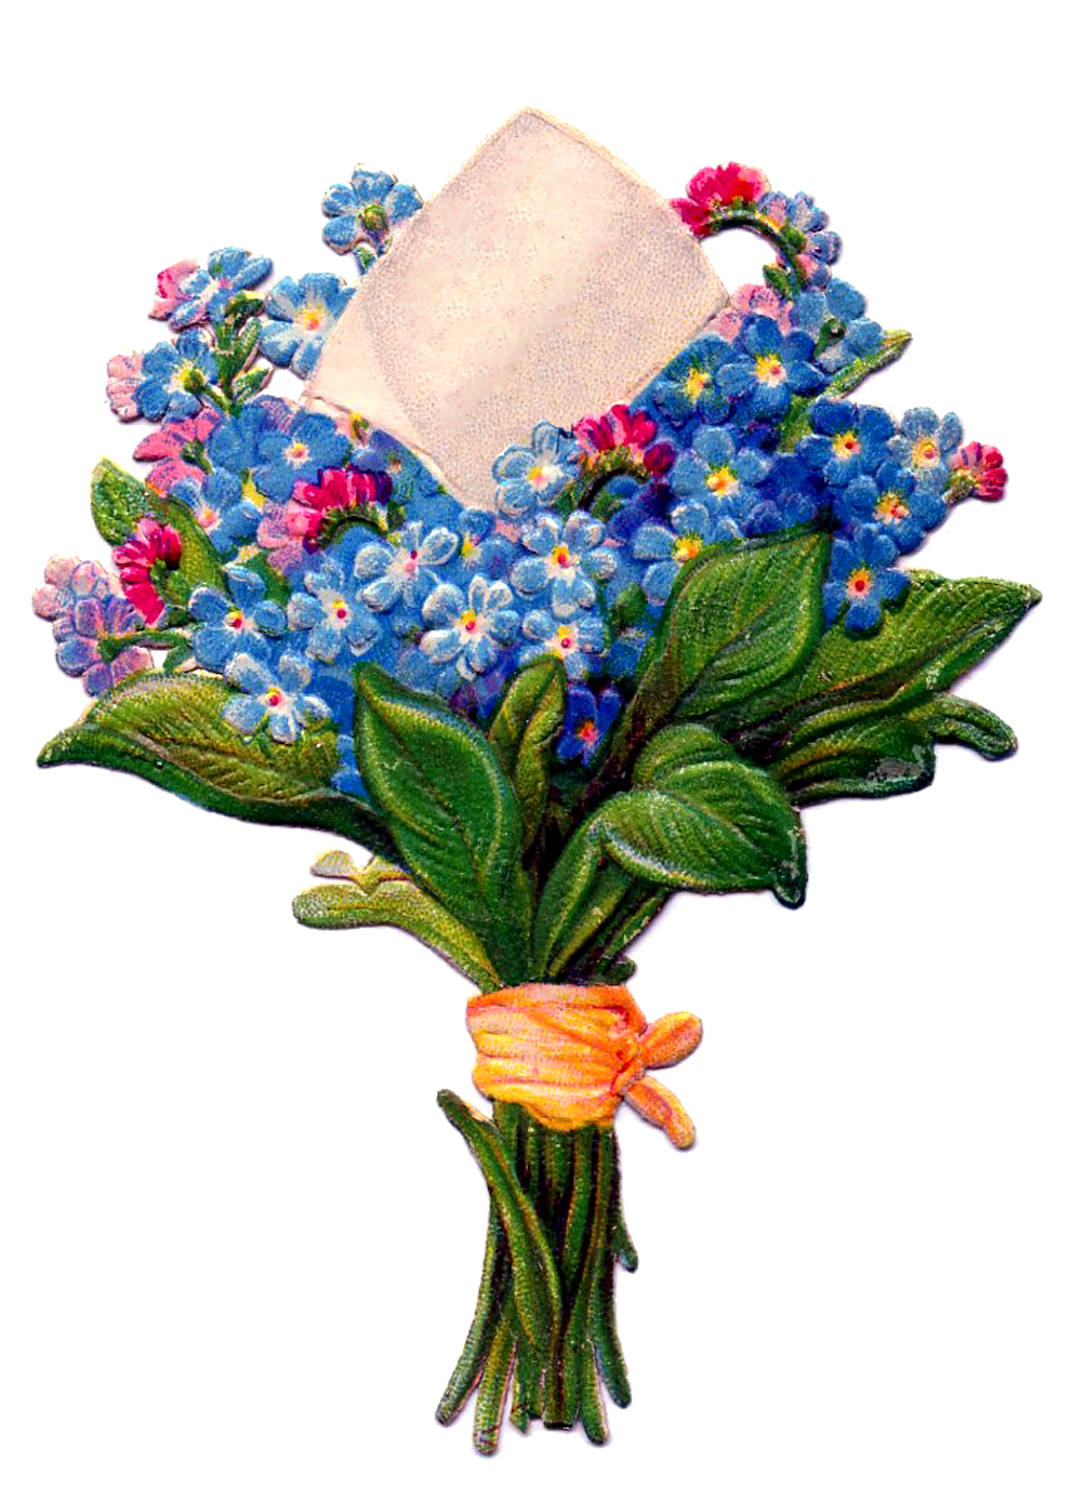 Floral Bouquet - Free Vintage Images - 2 Versions - The Graphics Fairy